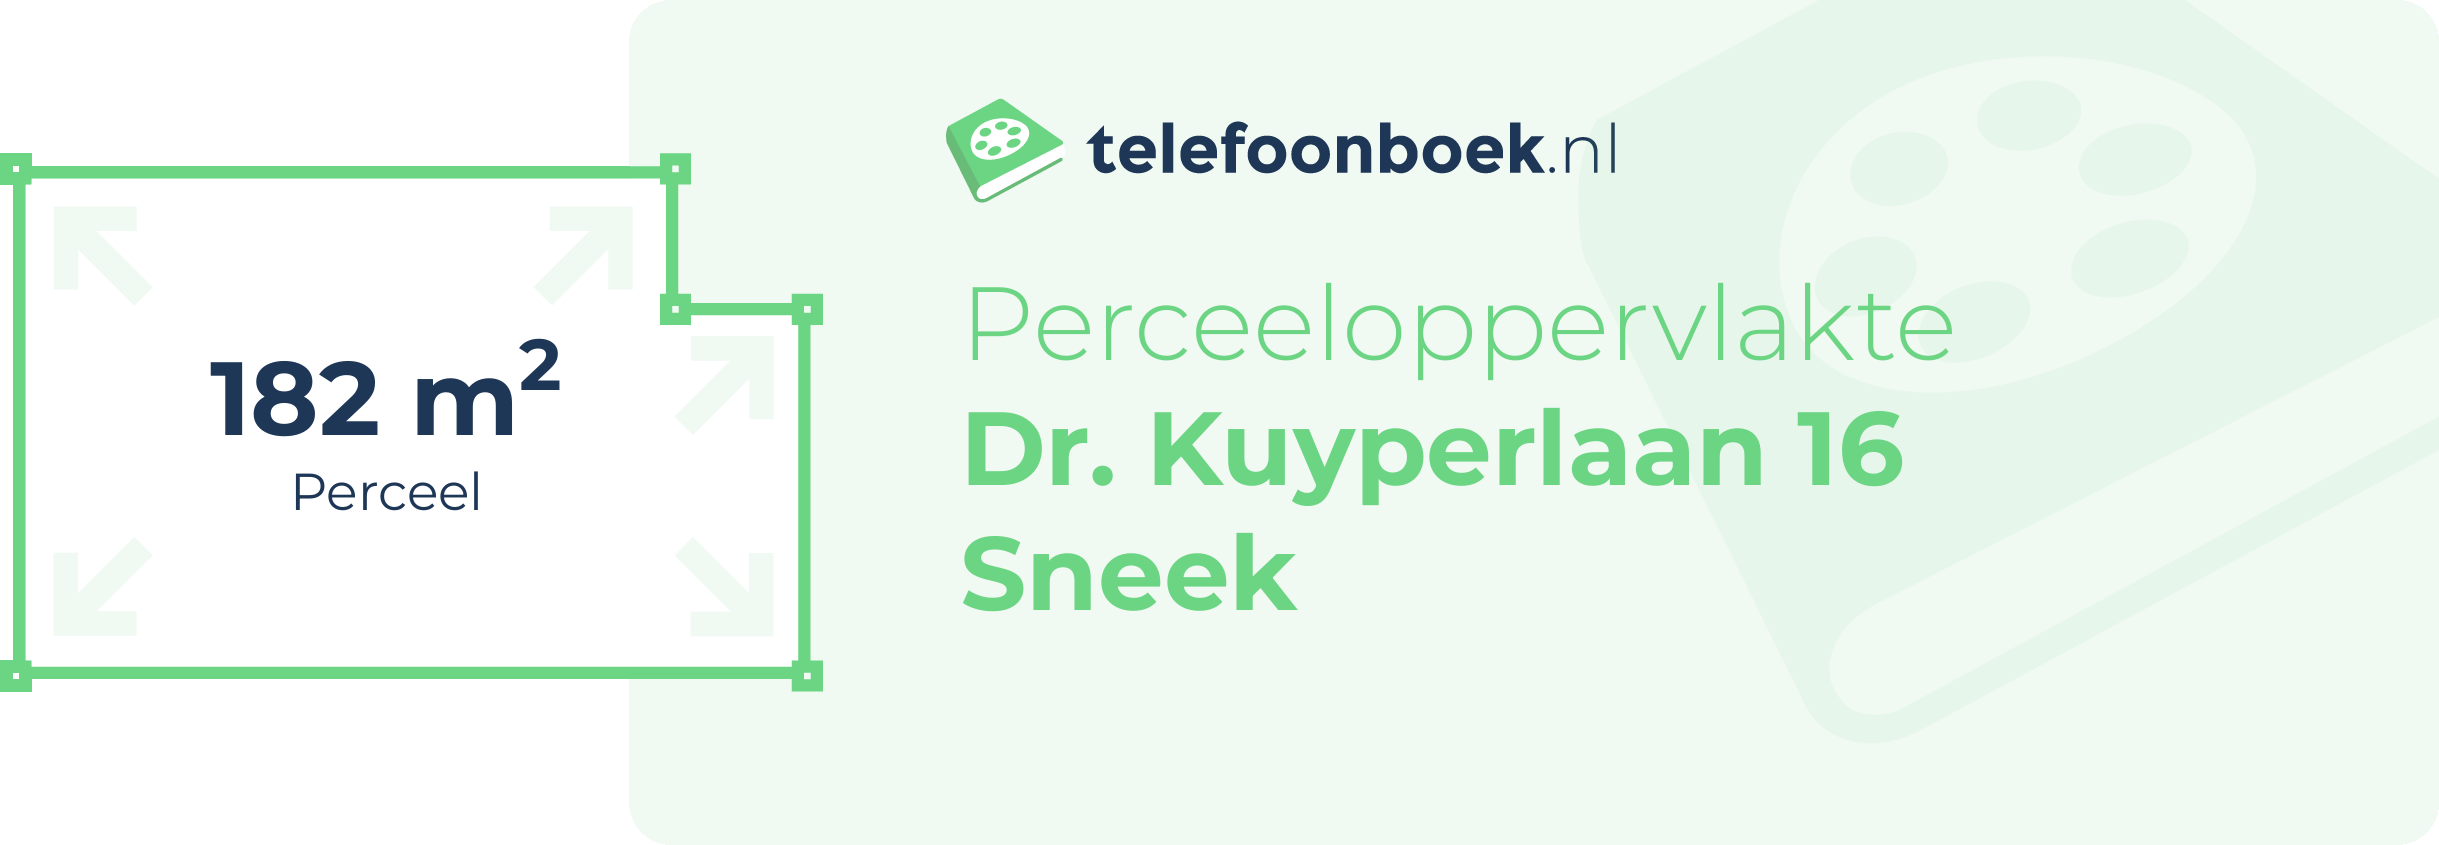 Perceeloppervlakte Dr. Kuyperlaan 16 Sneek